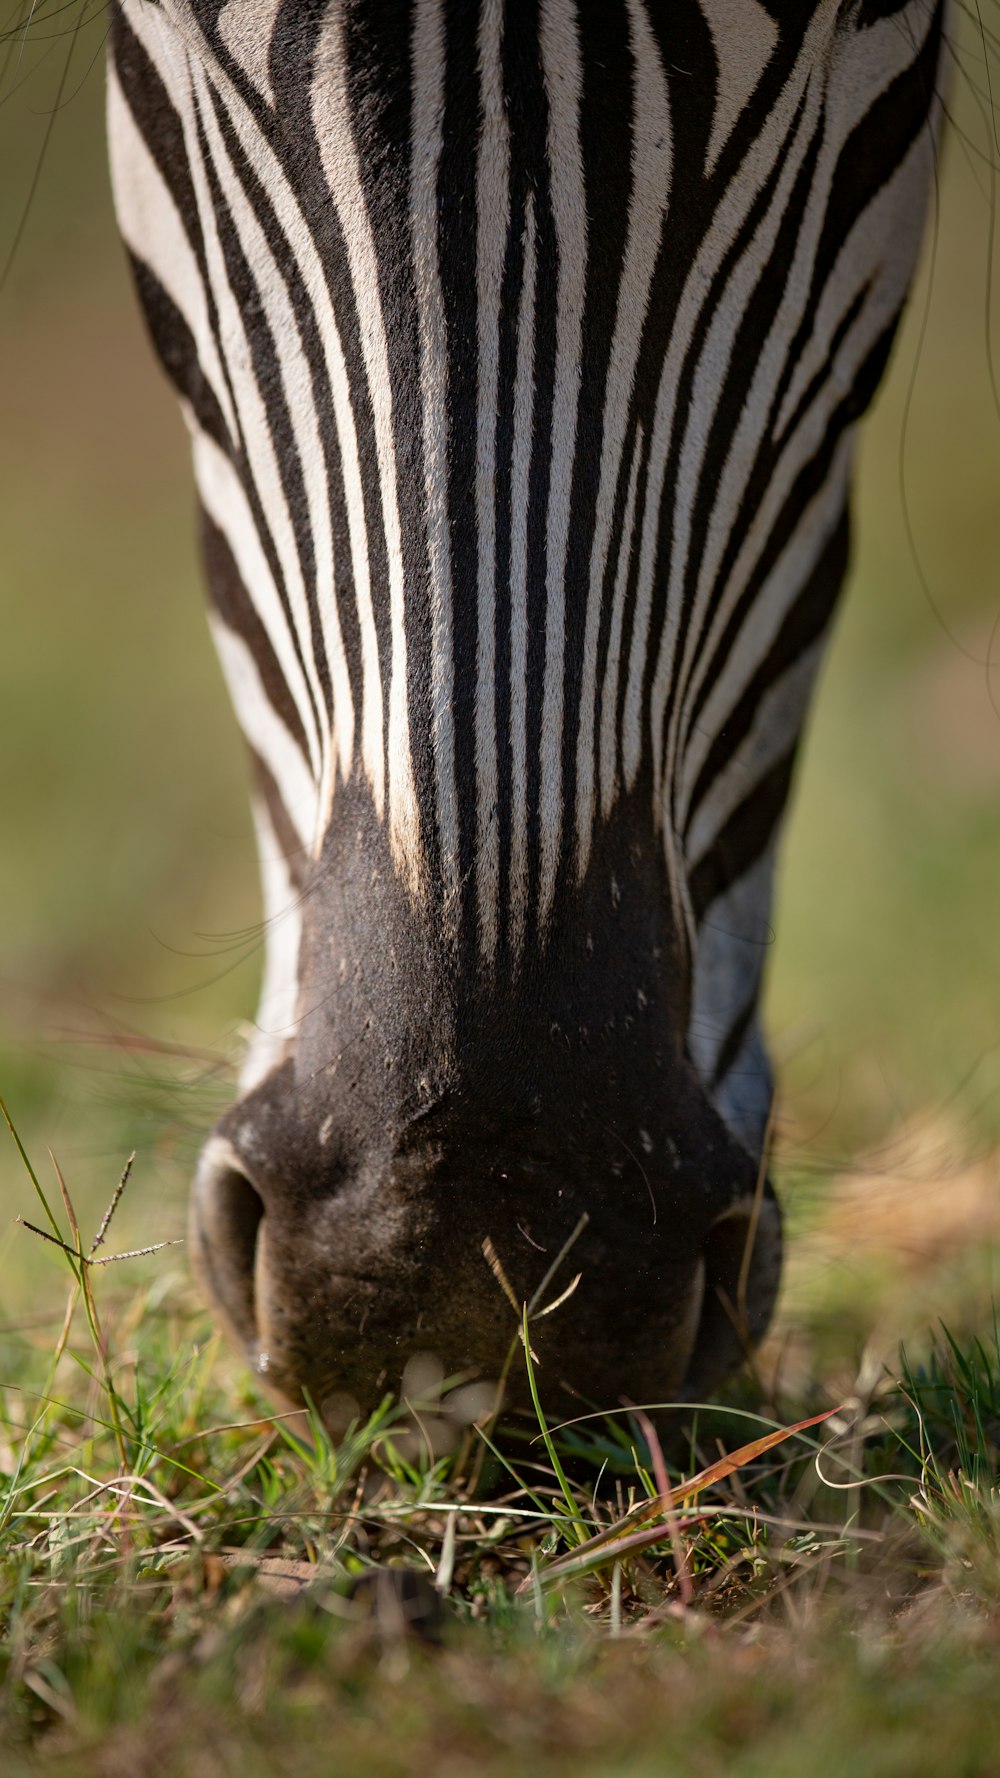 zebra animal on green grass during daytime